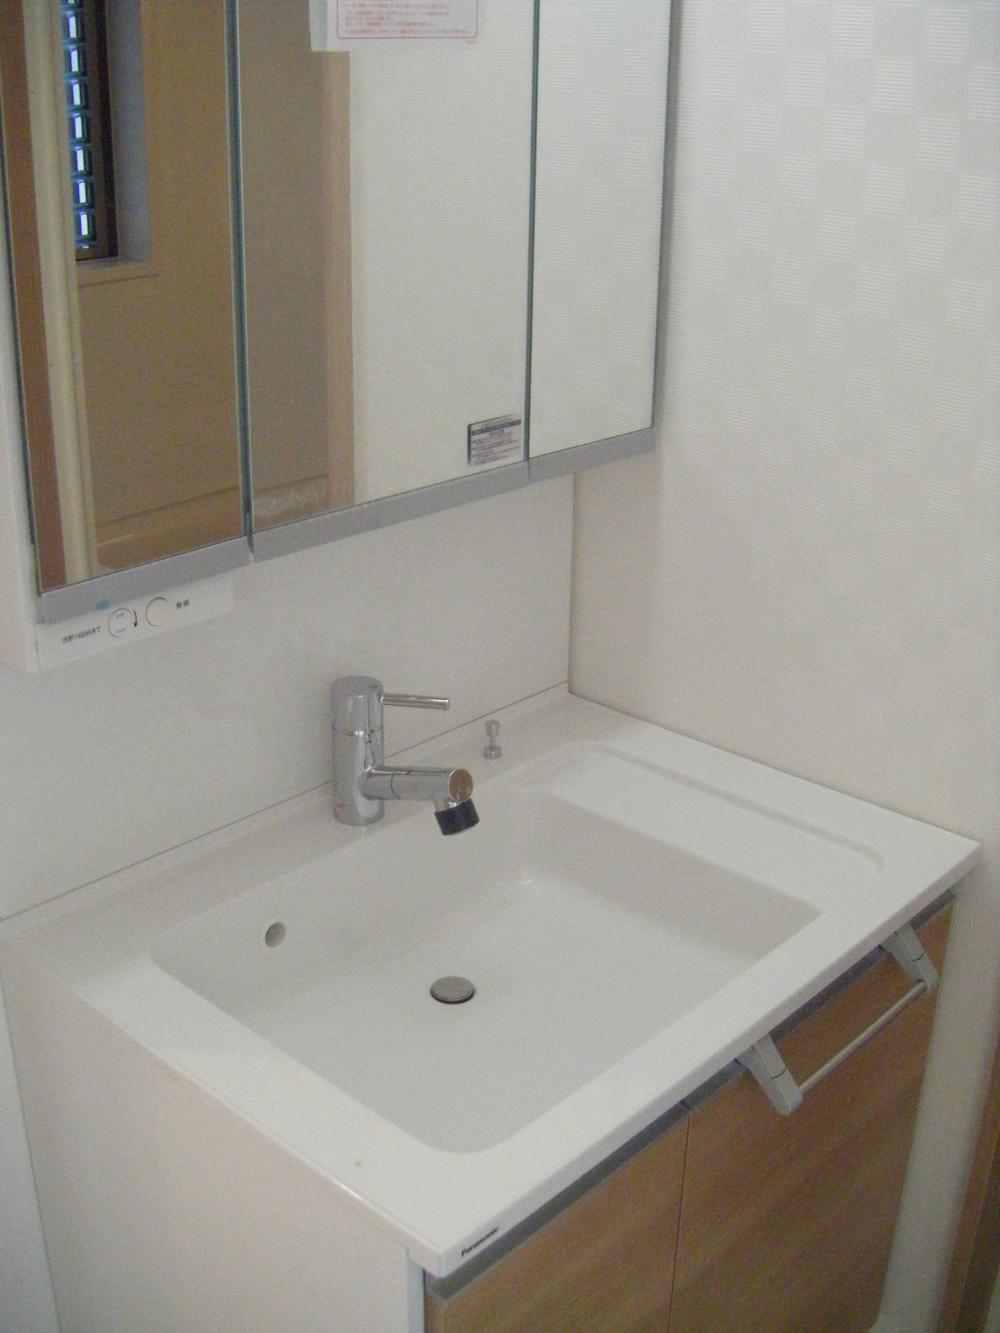 Wash basin, toilet. Panasonic made wash basin ・ Three-sided mirror